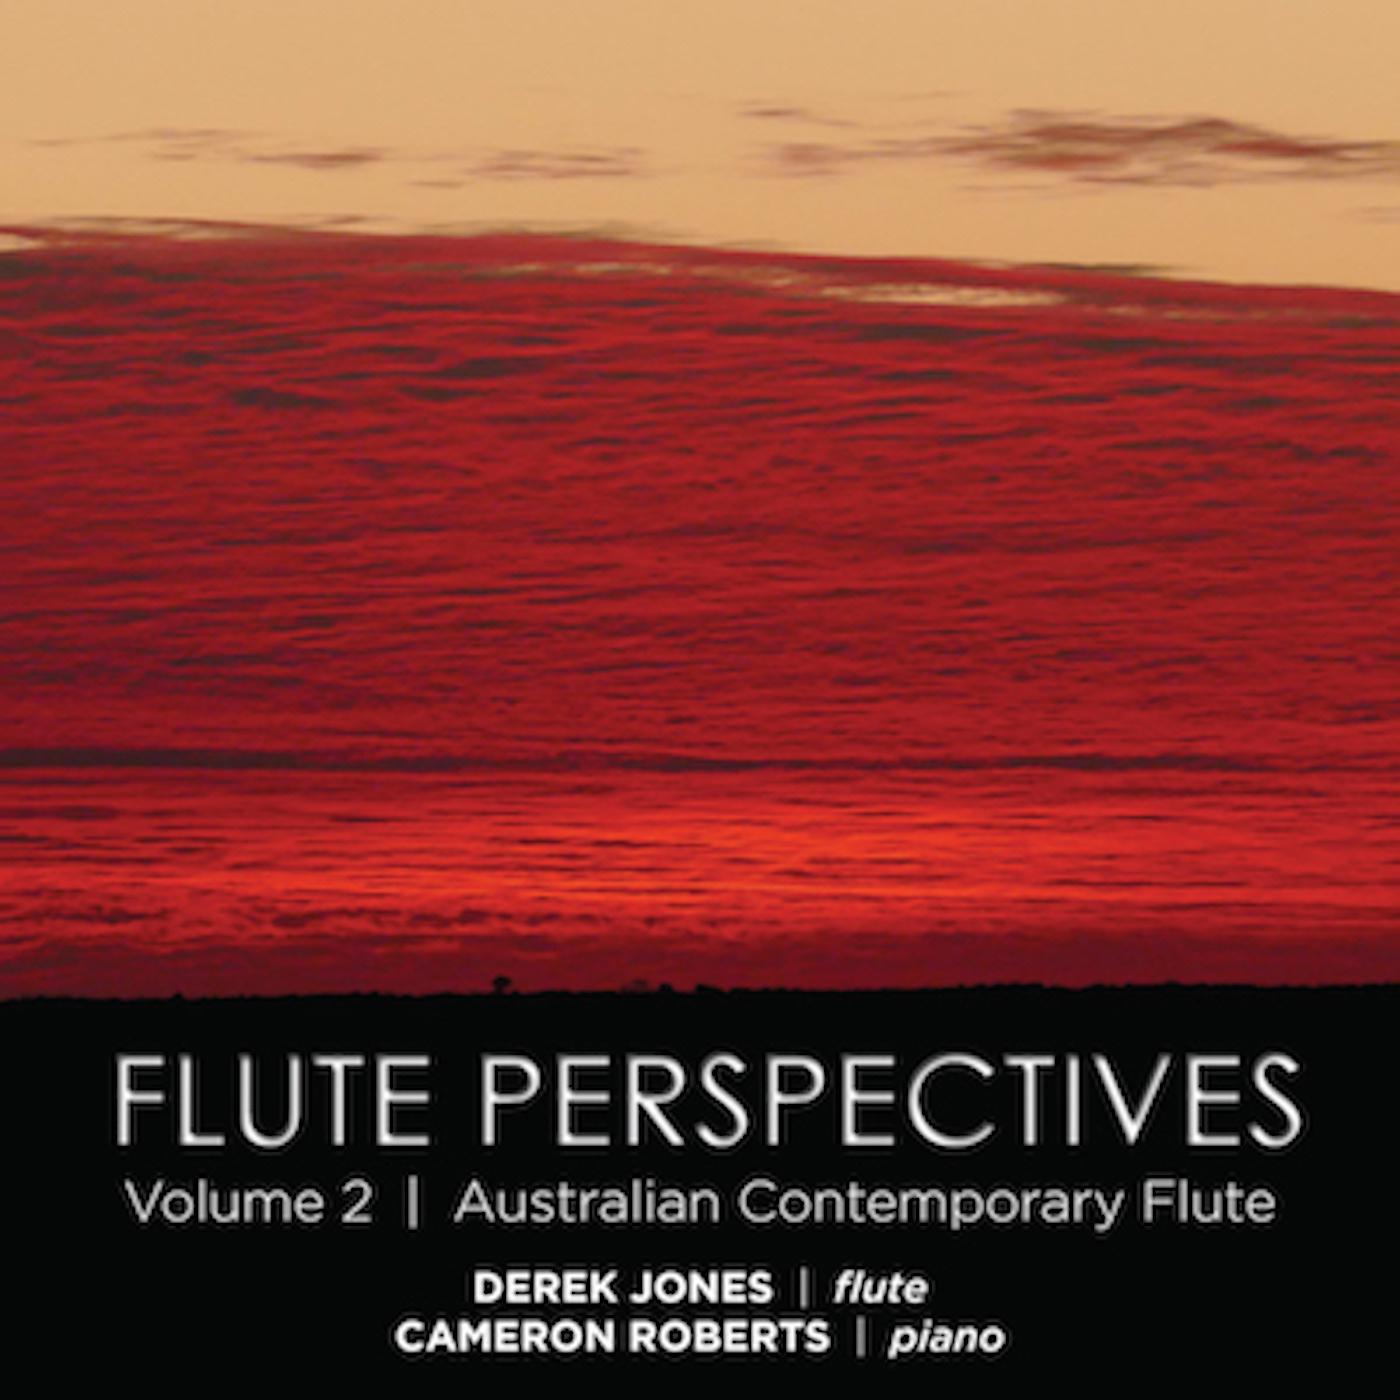 Derek Jones - Sonata for Flute and Piano - distance to Ganymede